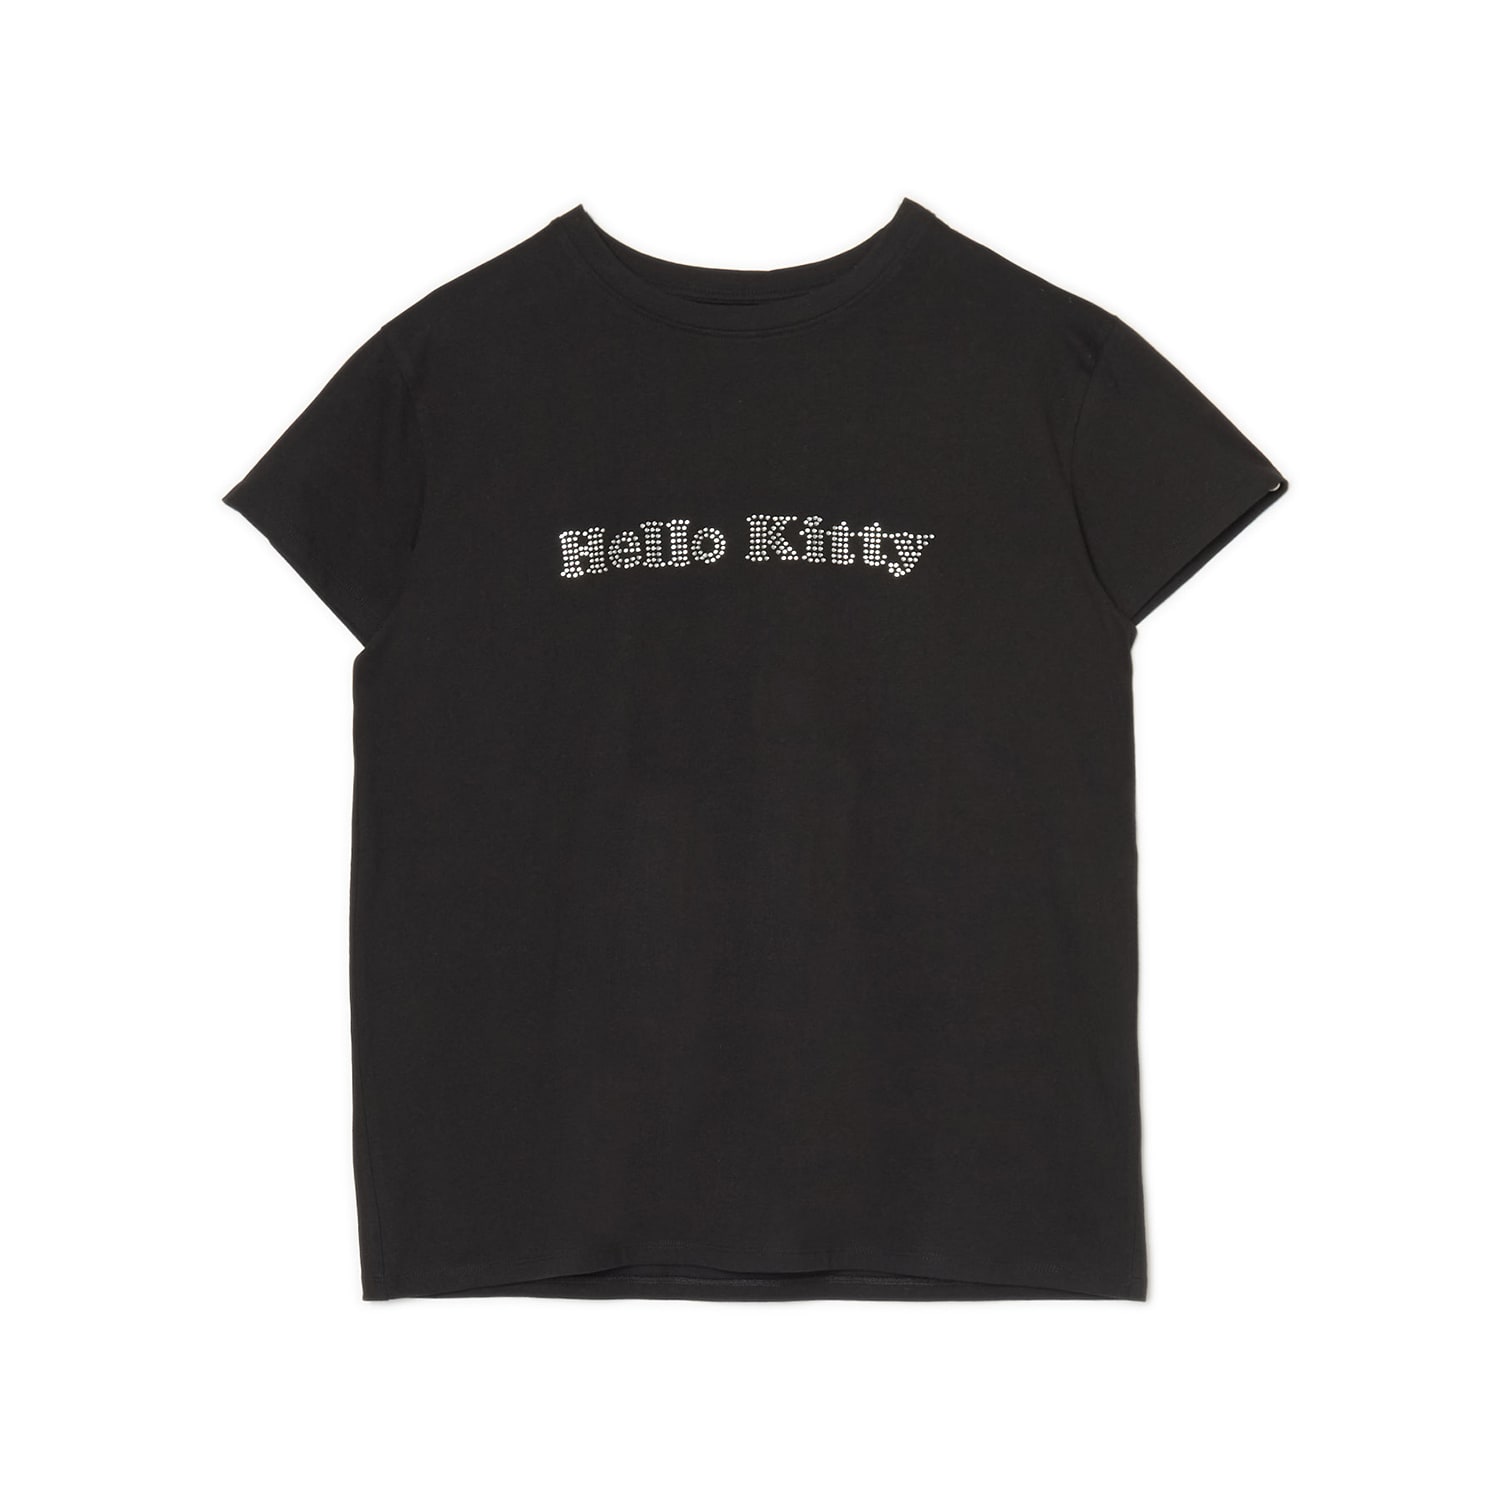 Cropp - Czarny t-shirt z cyrkoniami Hello Kitty - Czarny